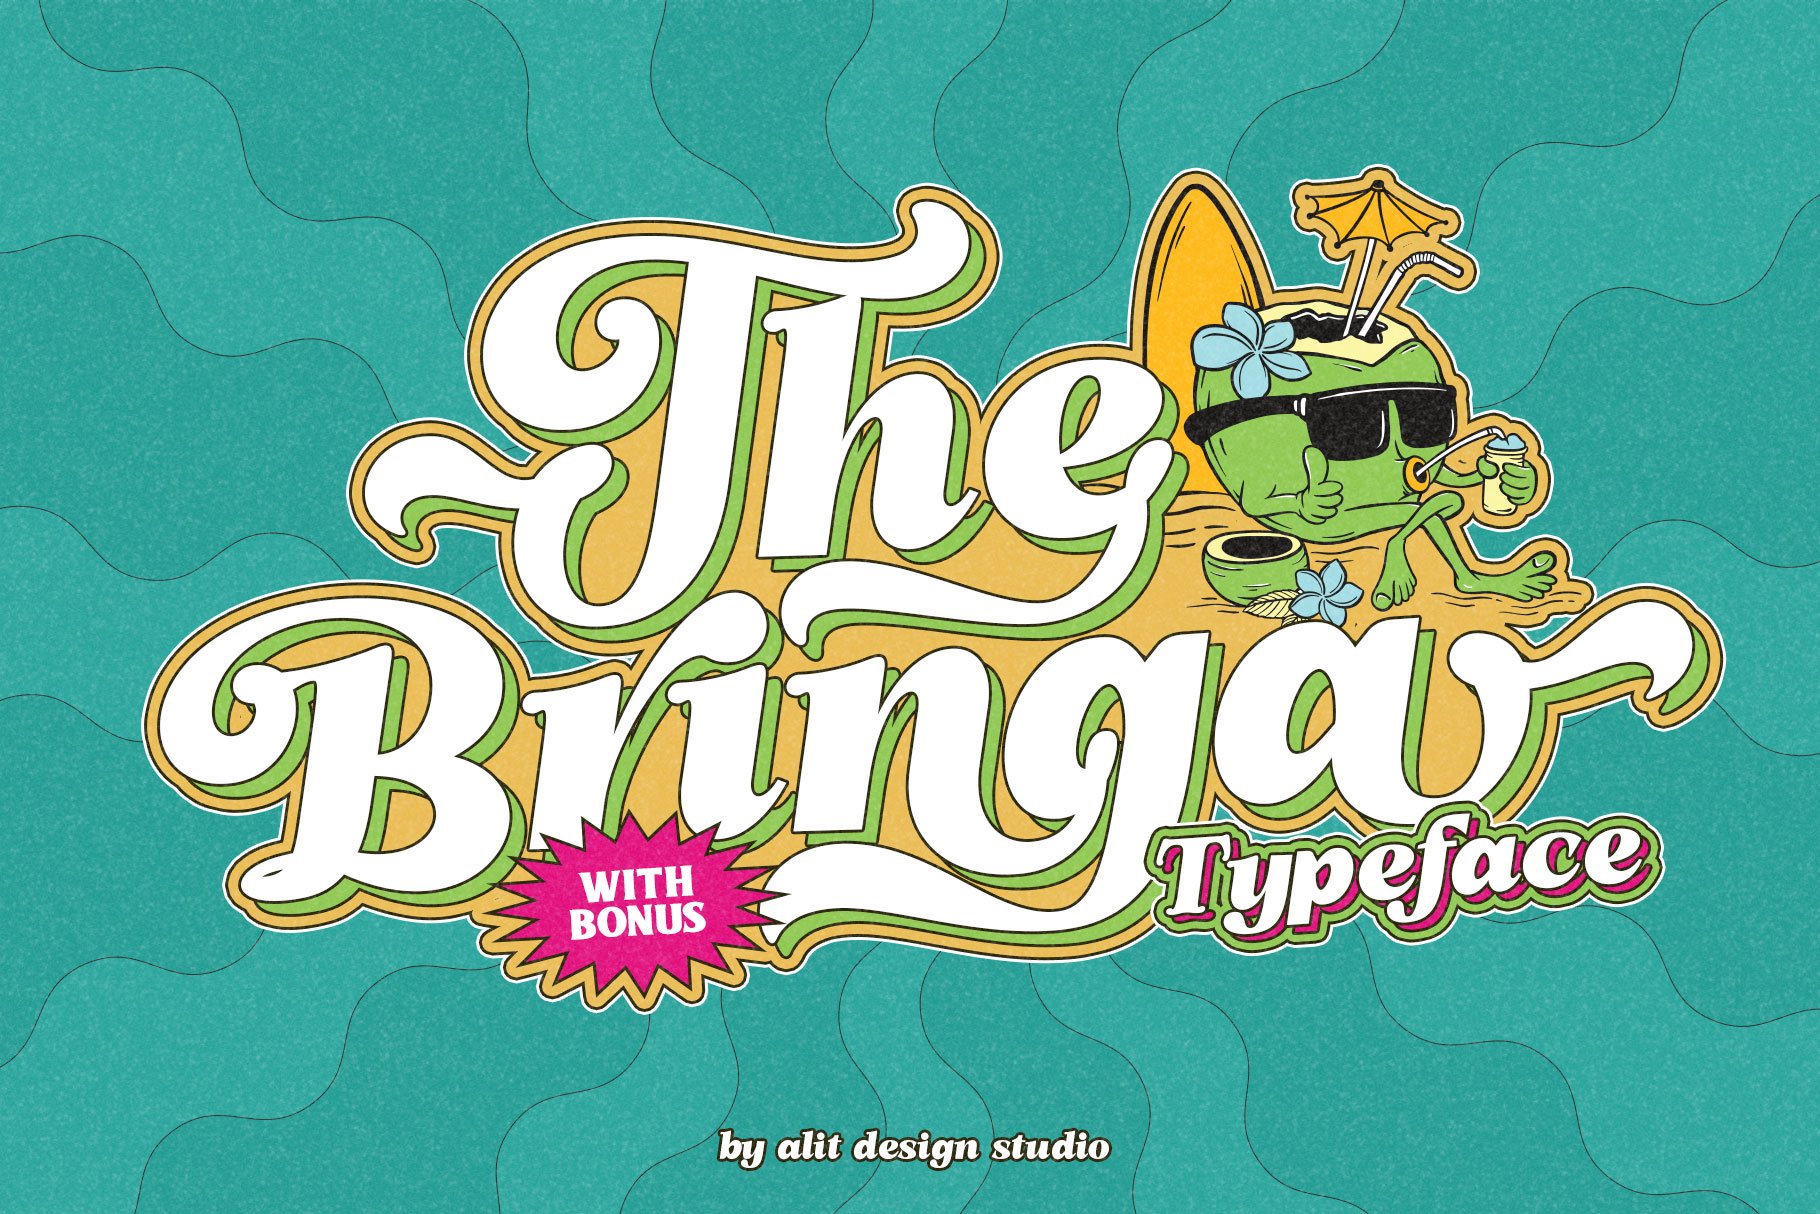 The Bringa Typefacecover image.